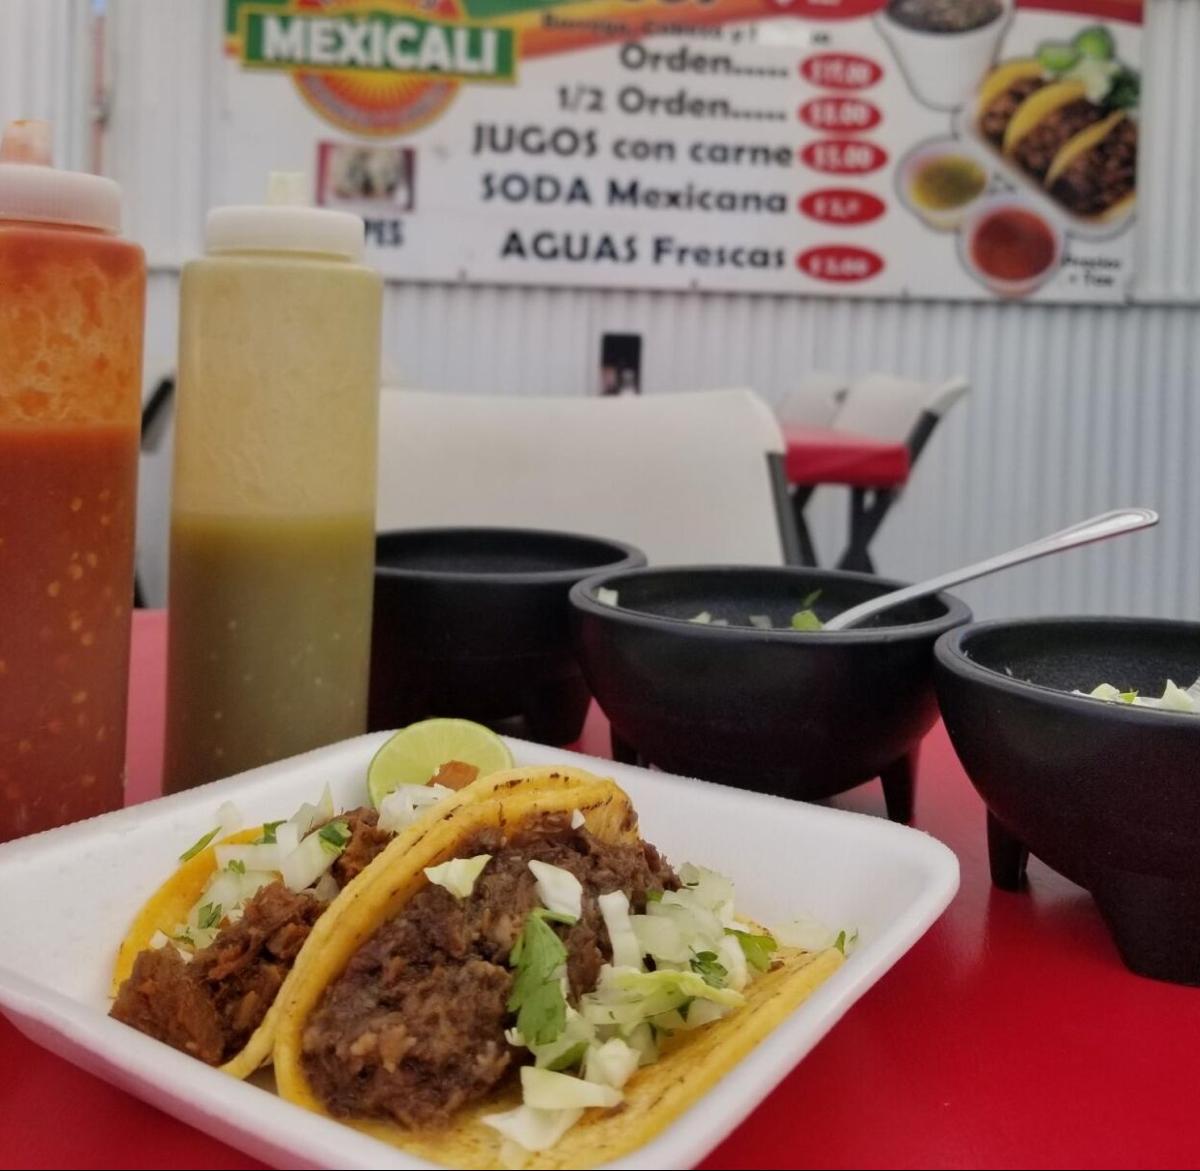 Tacos Mexicali